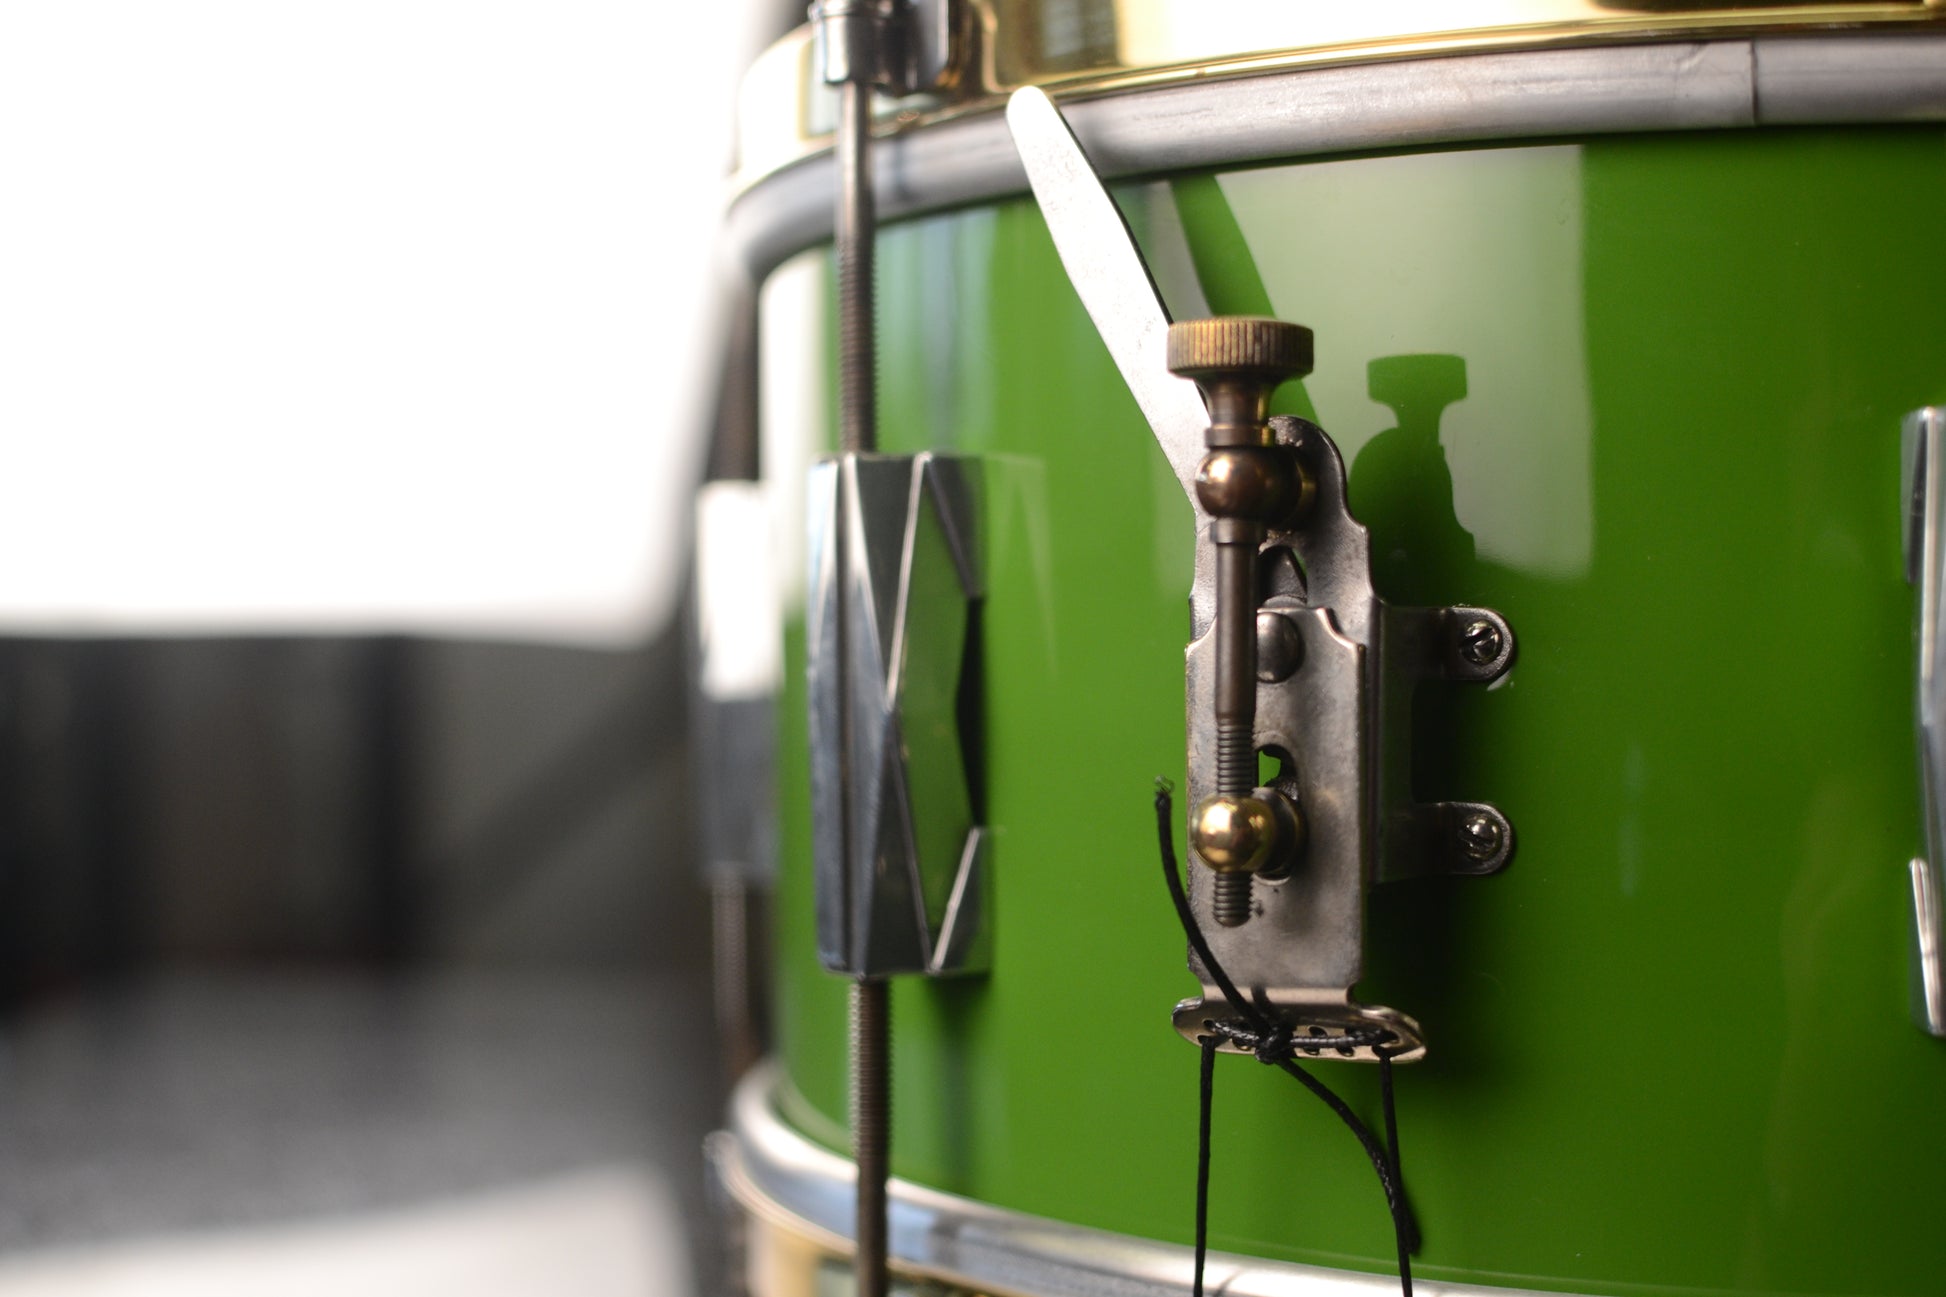 Gretsch 'Renown' 6.5" x 14" Vintage Snare Drum with 'Rocket' Lugs - 1950